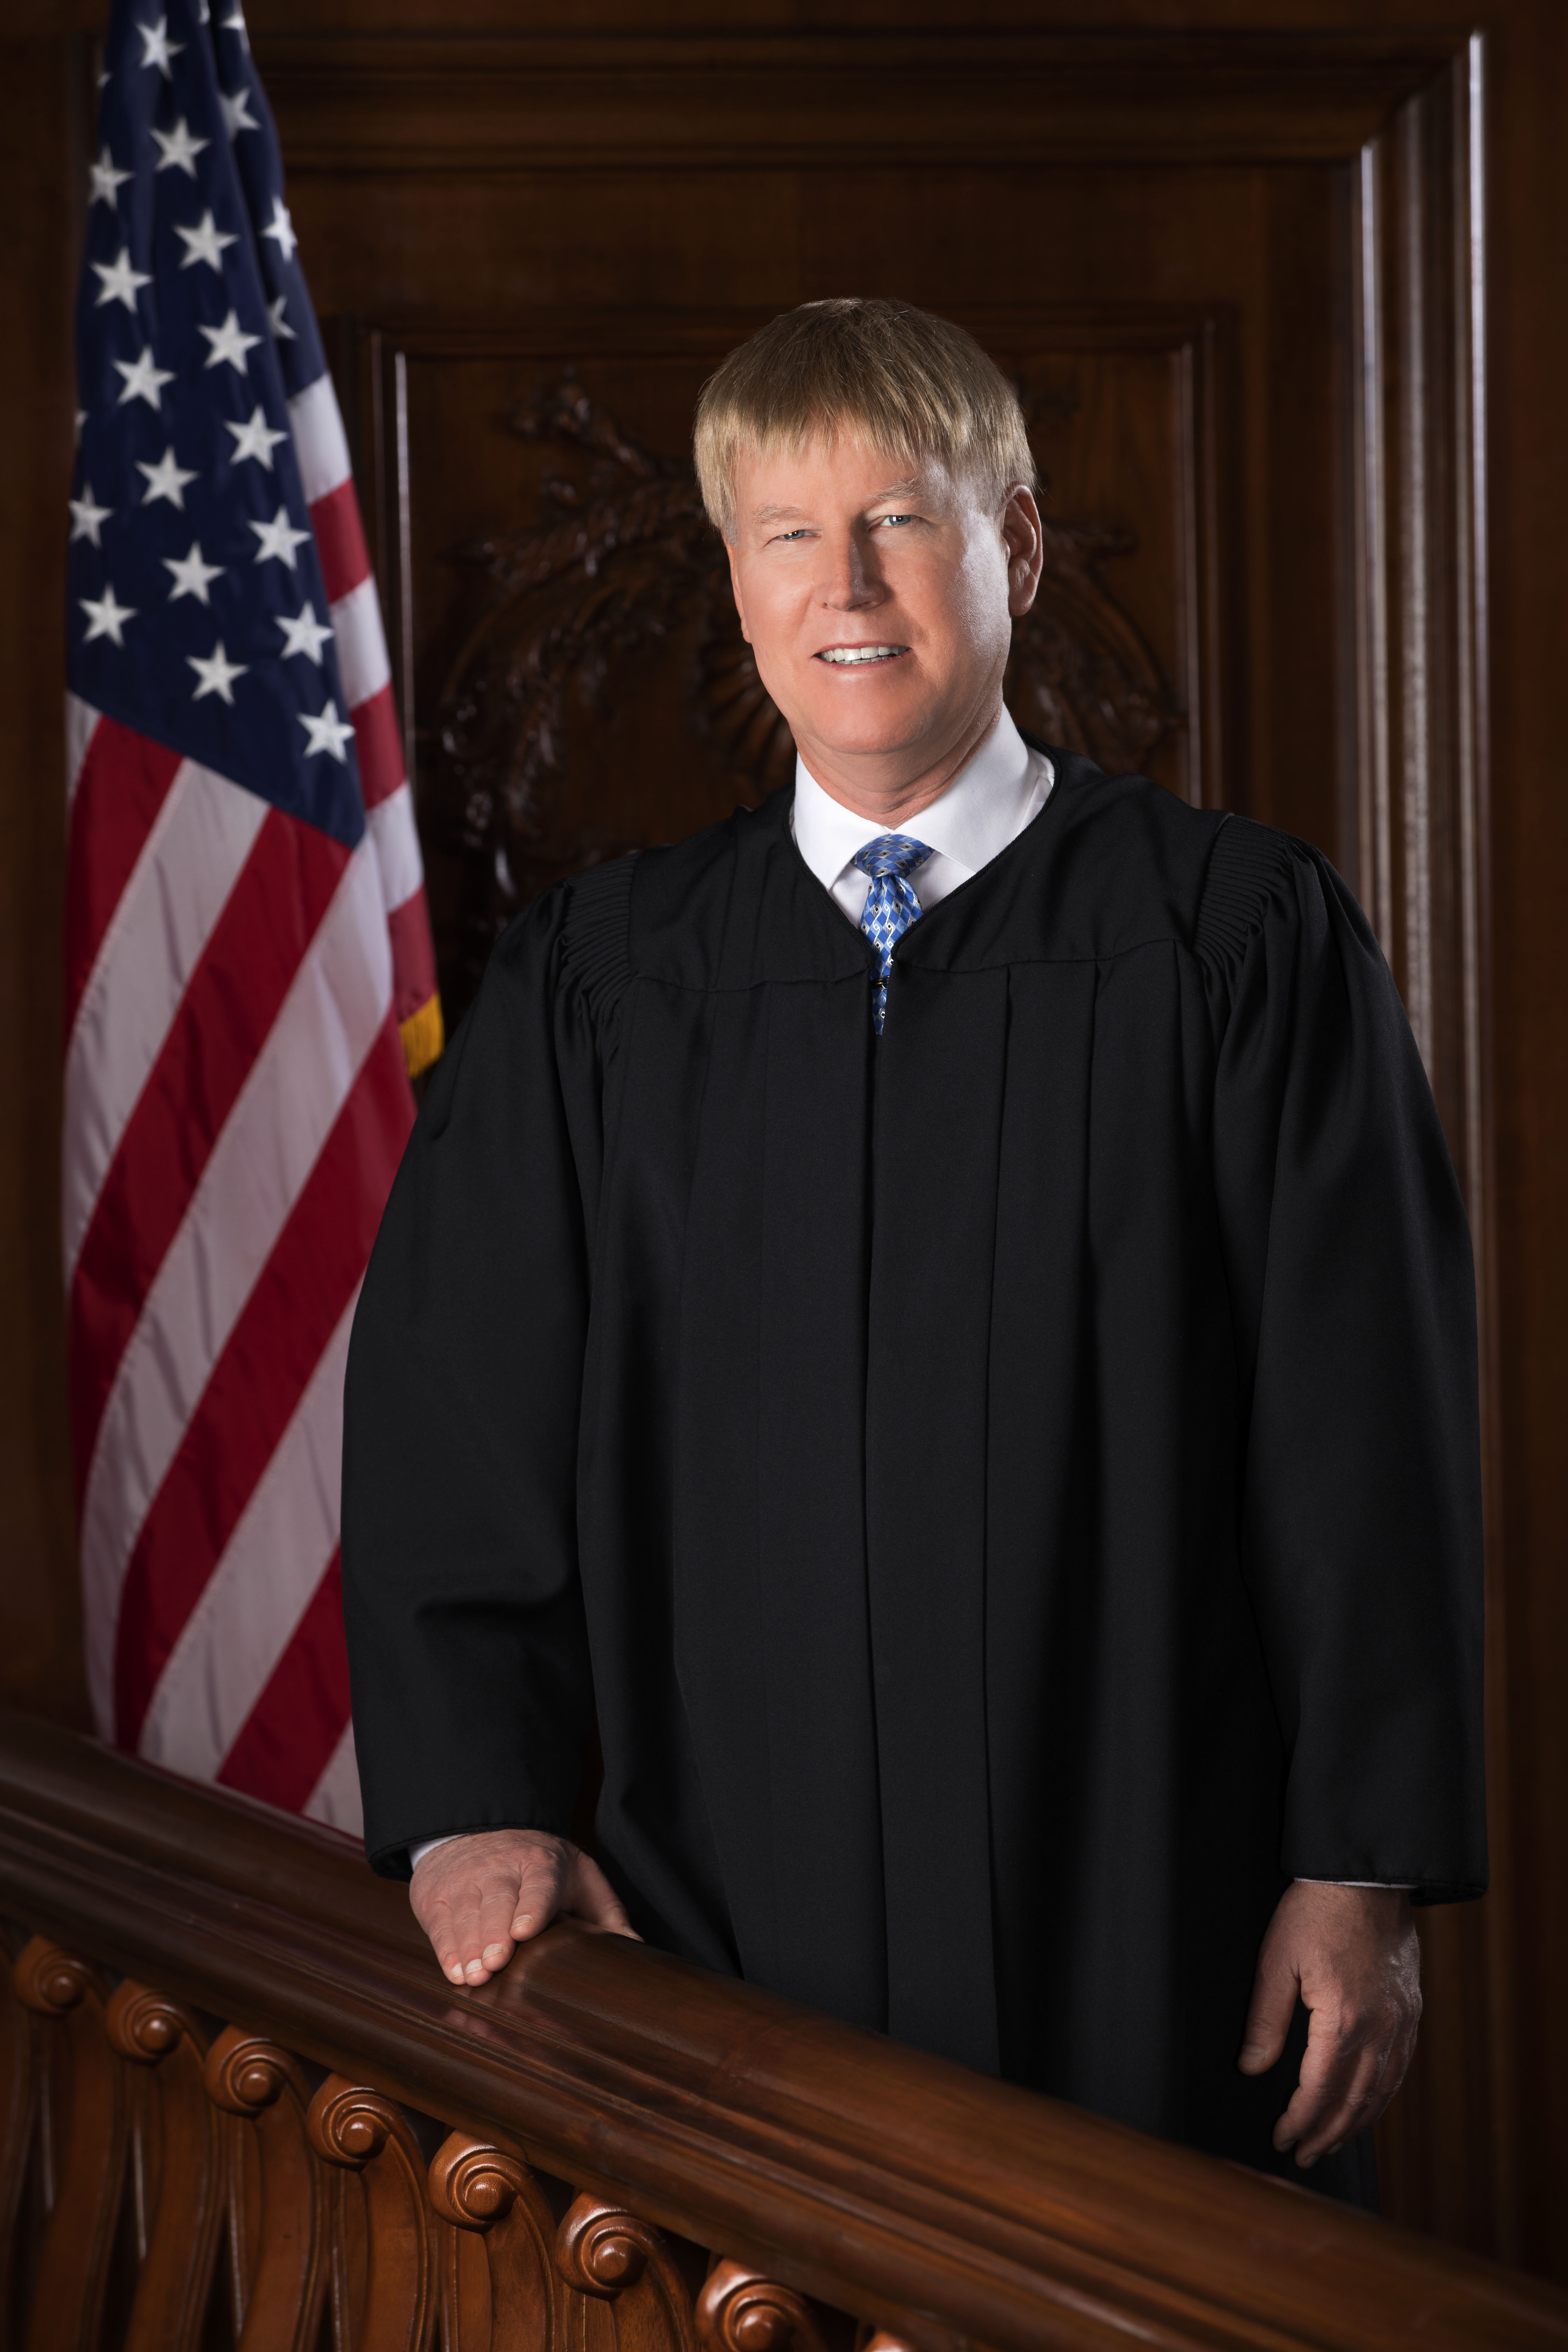 Judge Gibbons